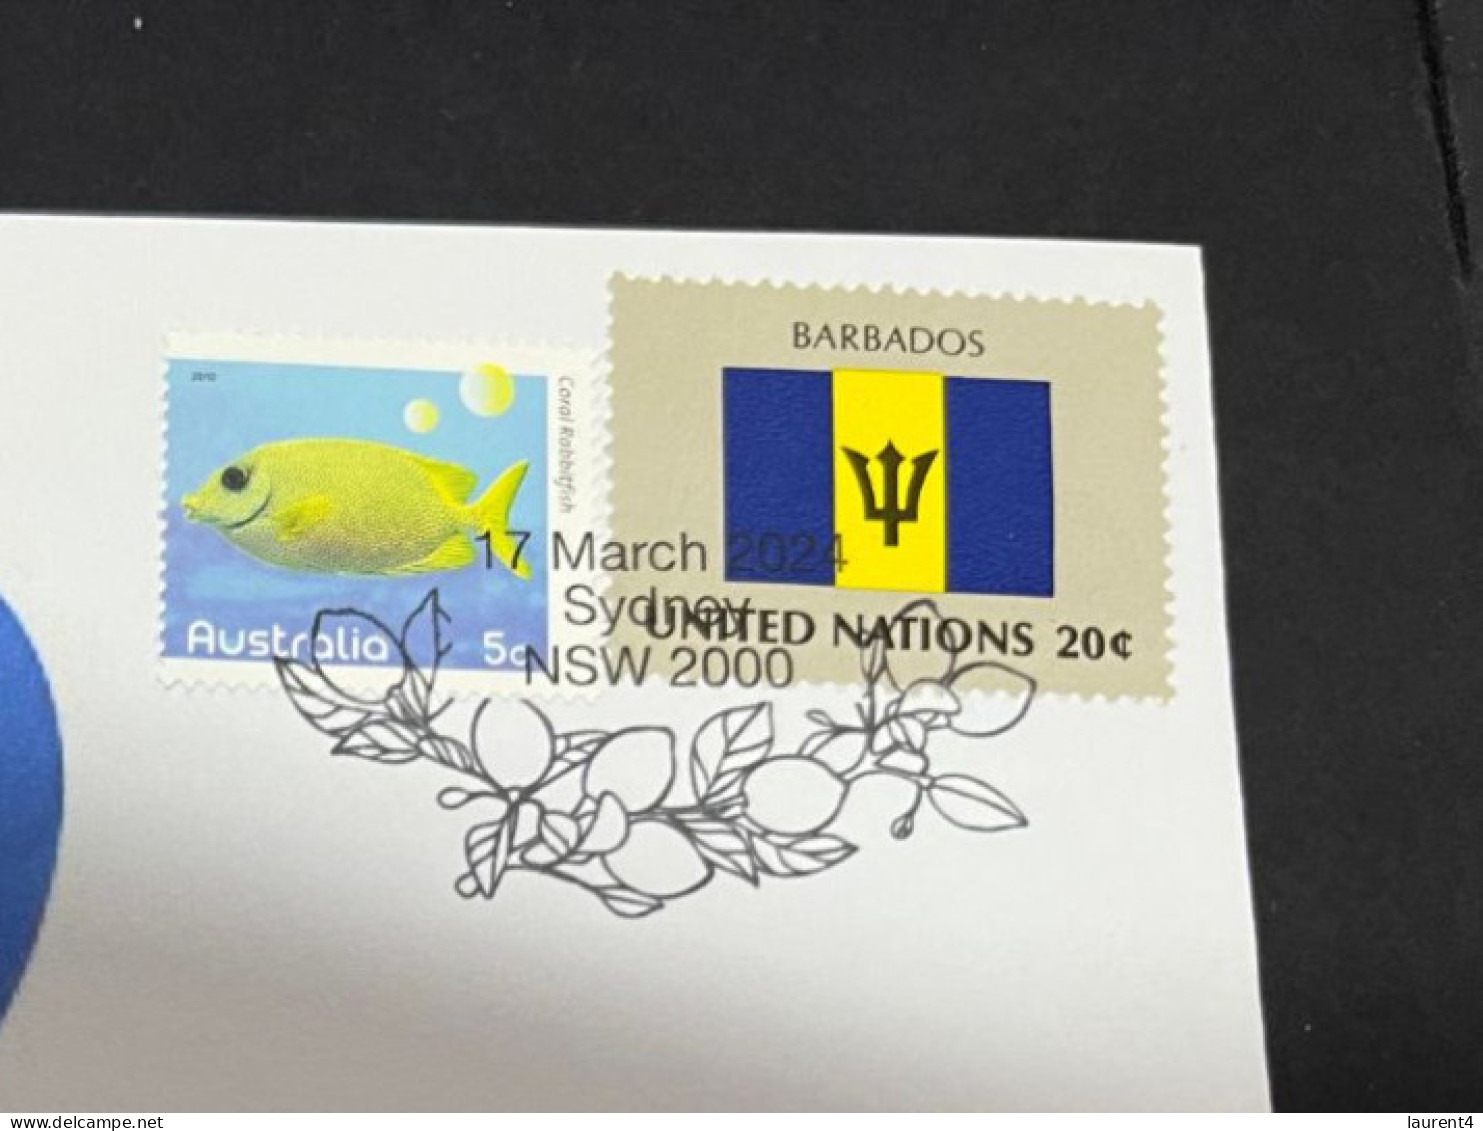 17-3-2024 (3 Y 19) COVID-19 4th Anniversary - Barbados - 17 March 2024 (with Barbedos UN Flag Stamp) - Disease